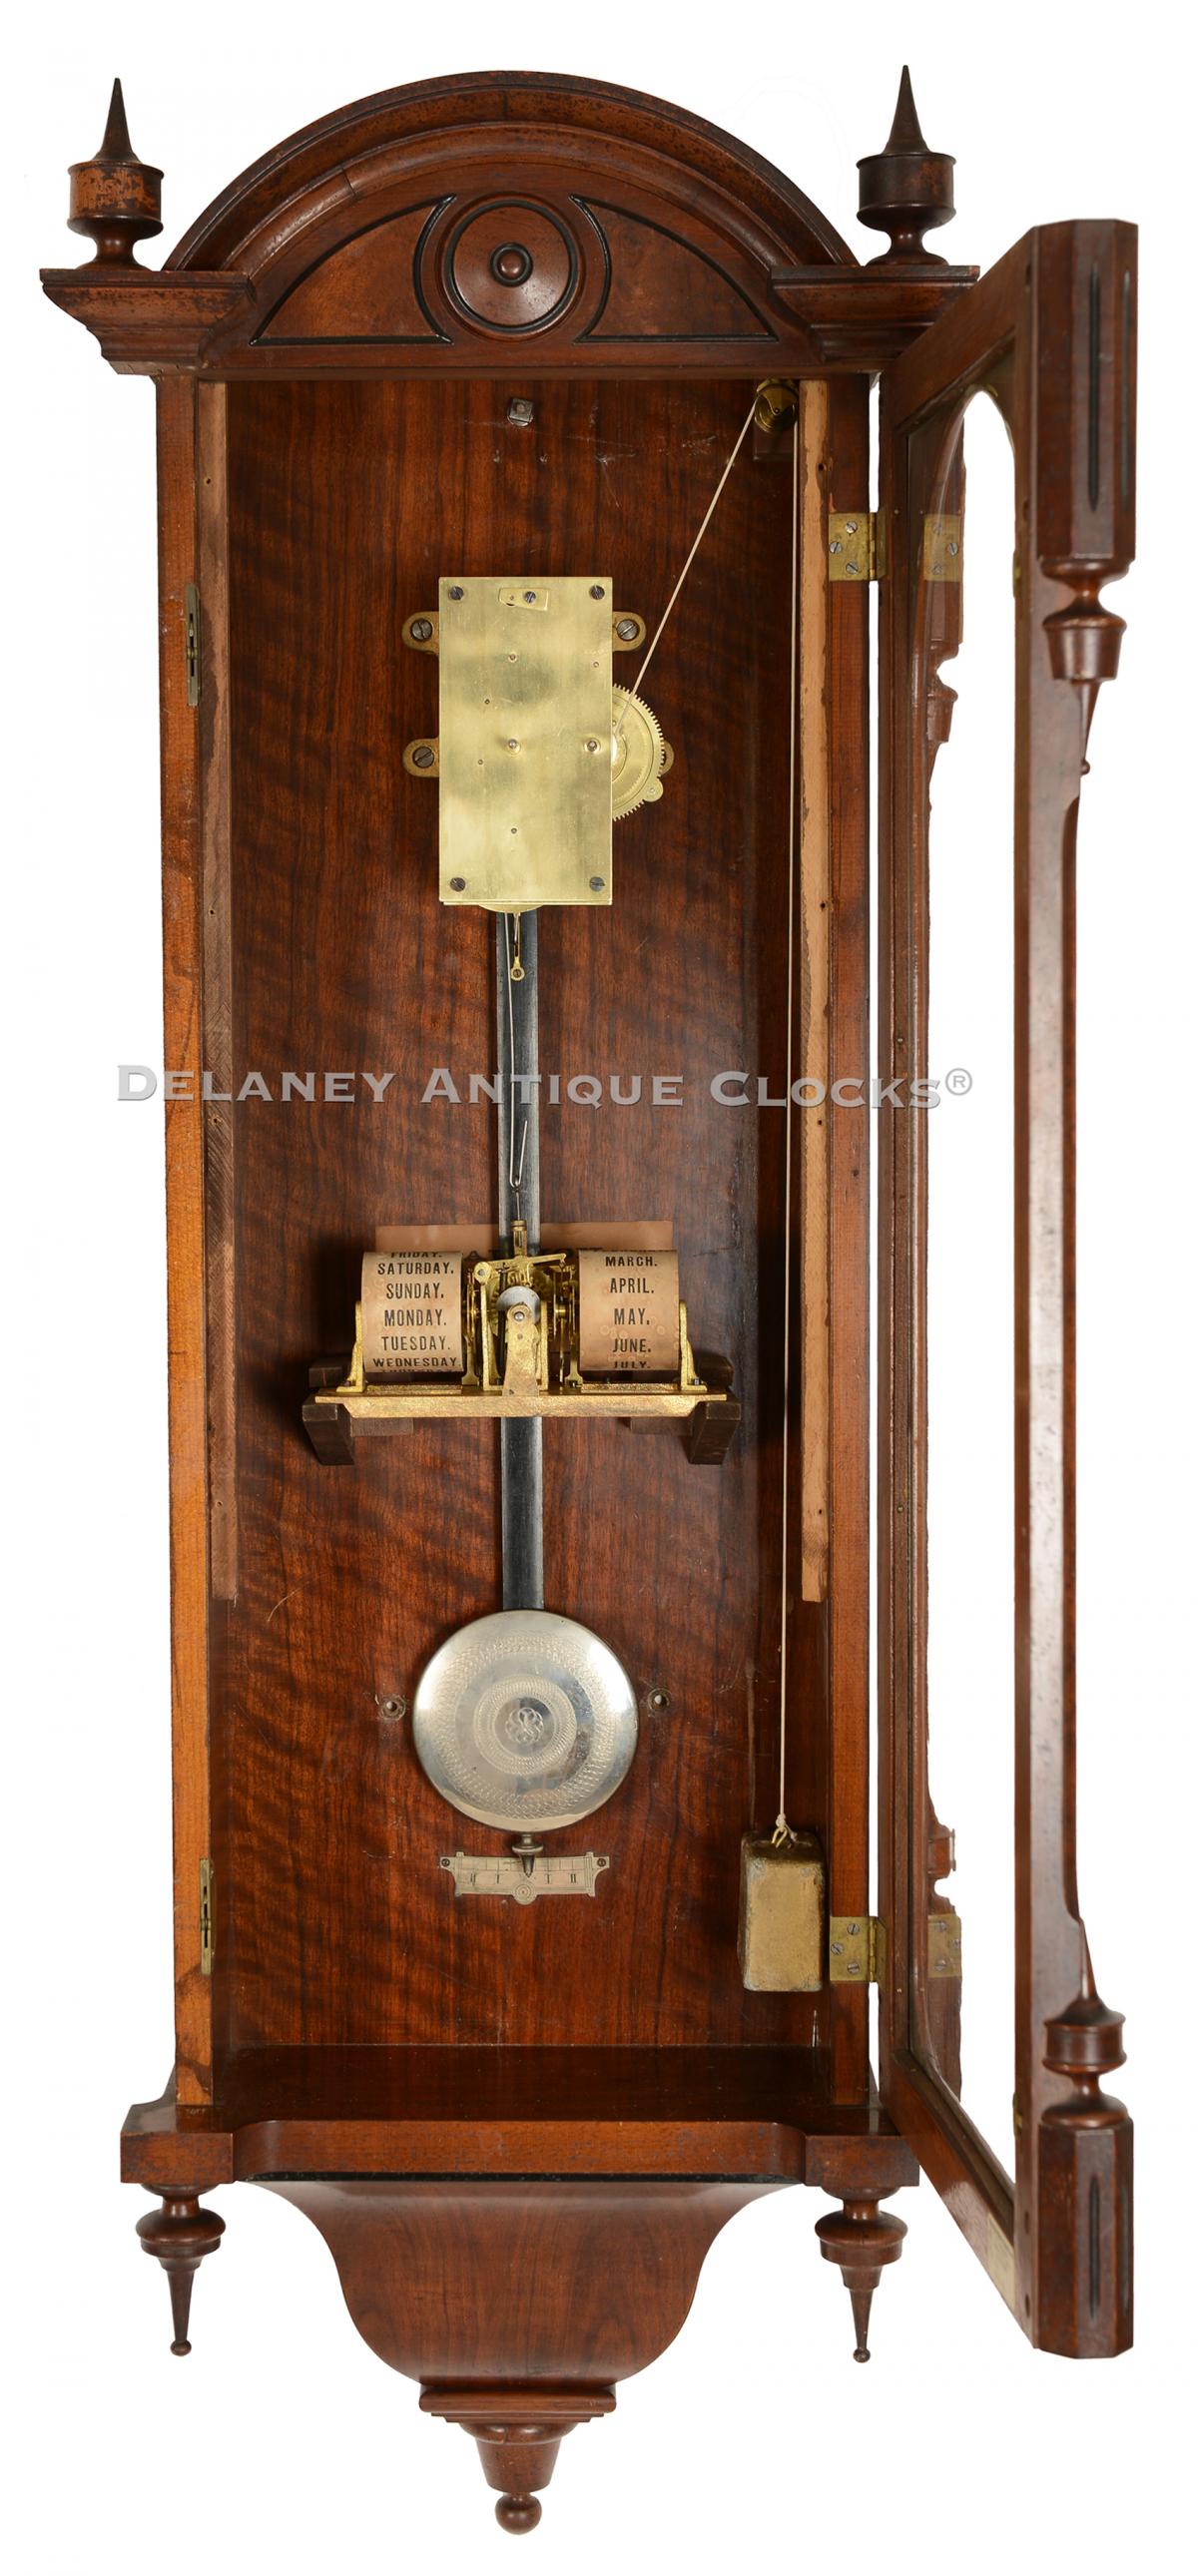  Seth Thomas Office Calendar No. 10. A double dial wall clock. 223046. Delaney Antique Clocks.